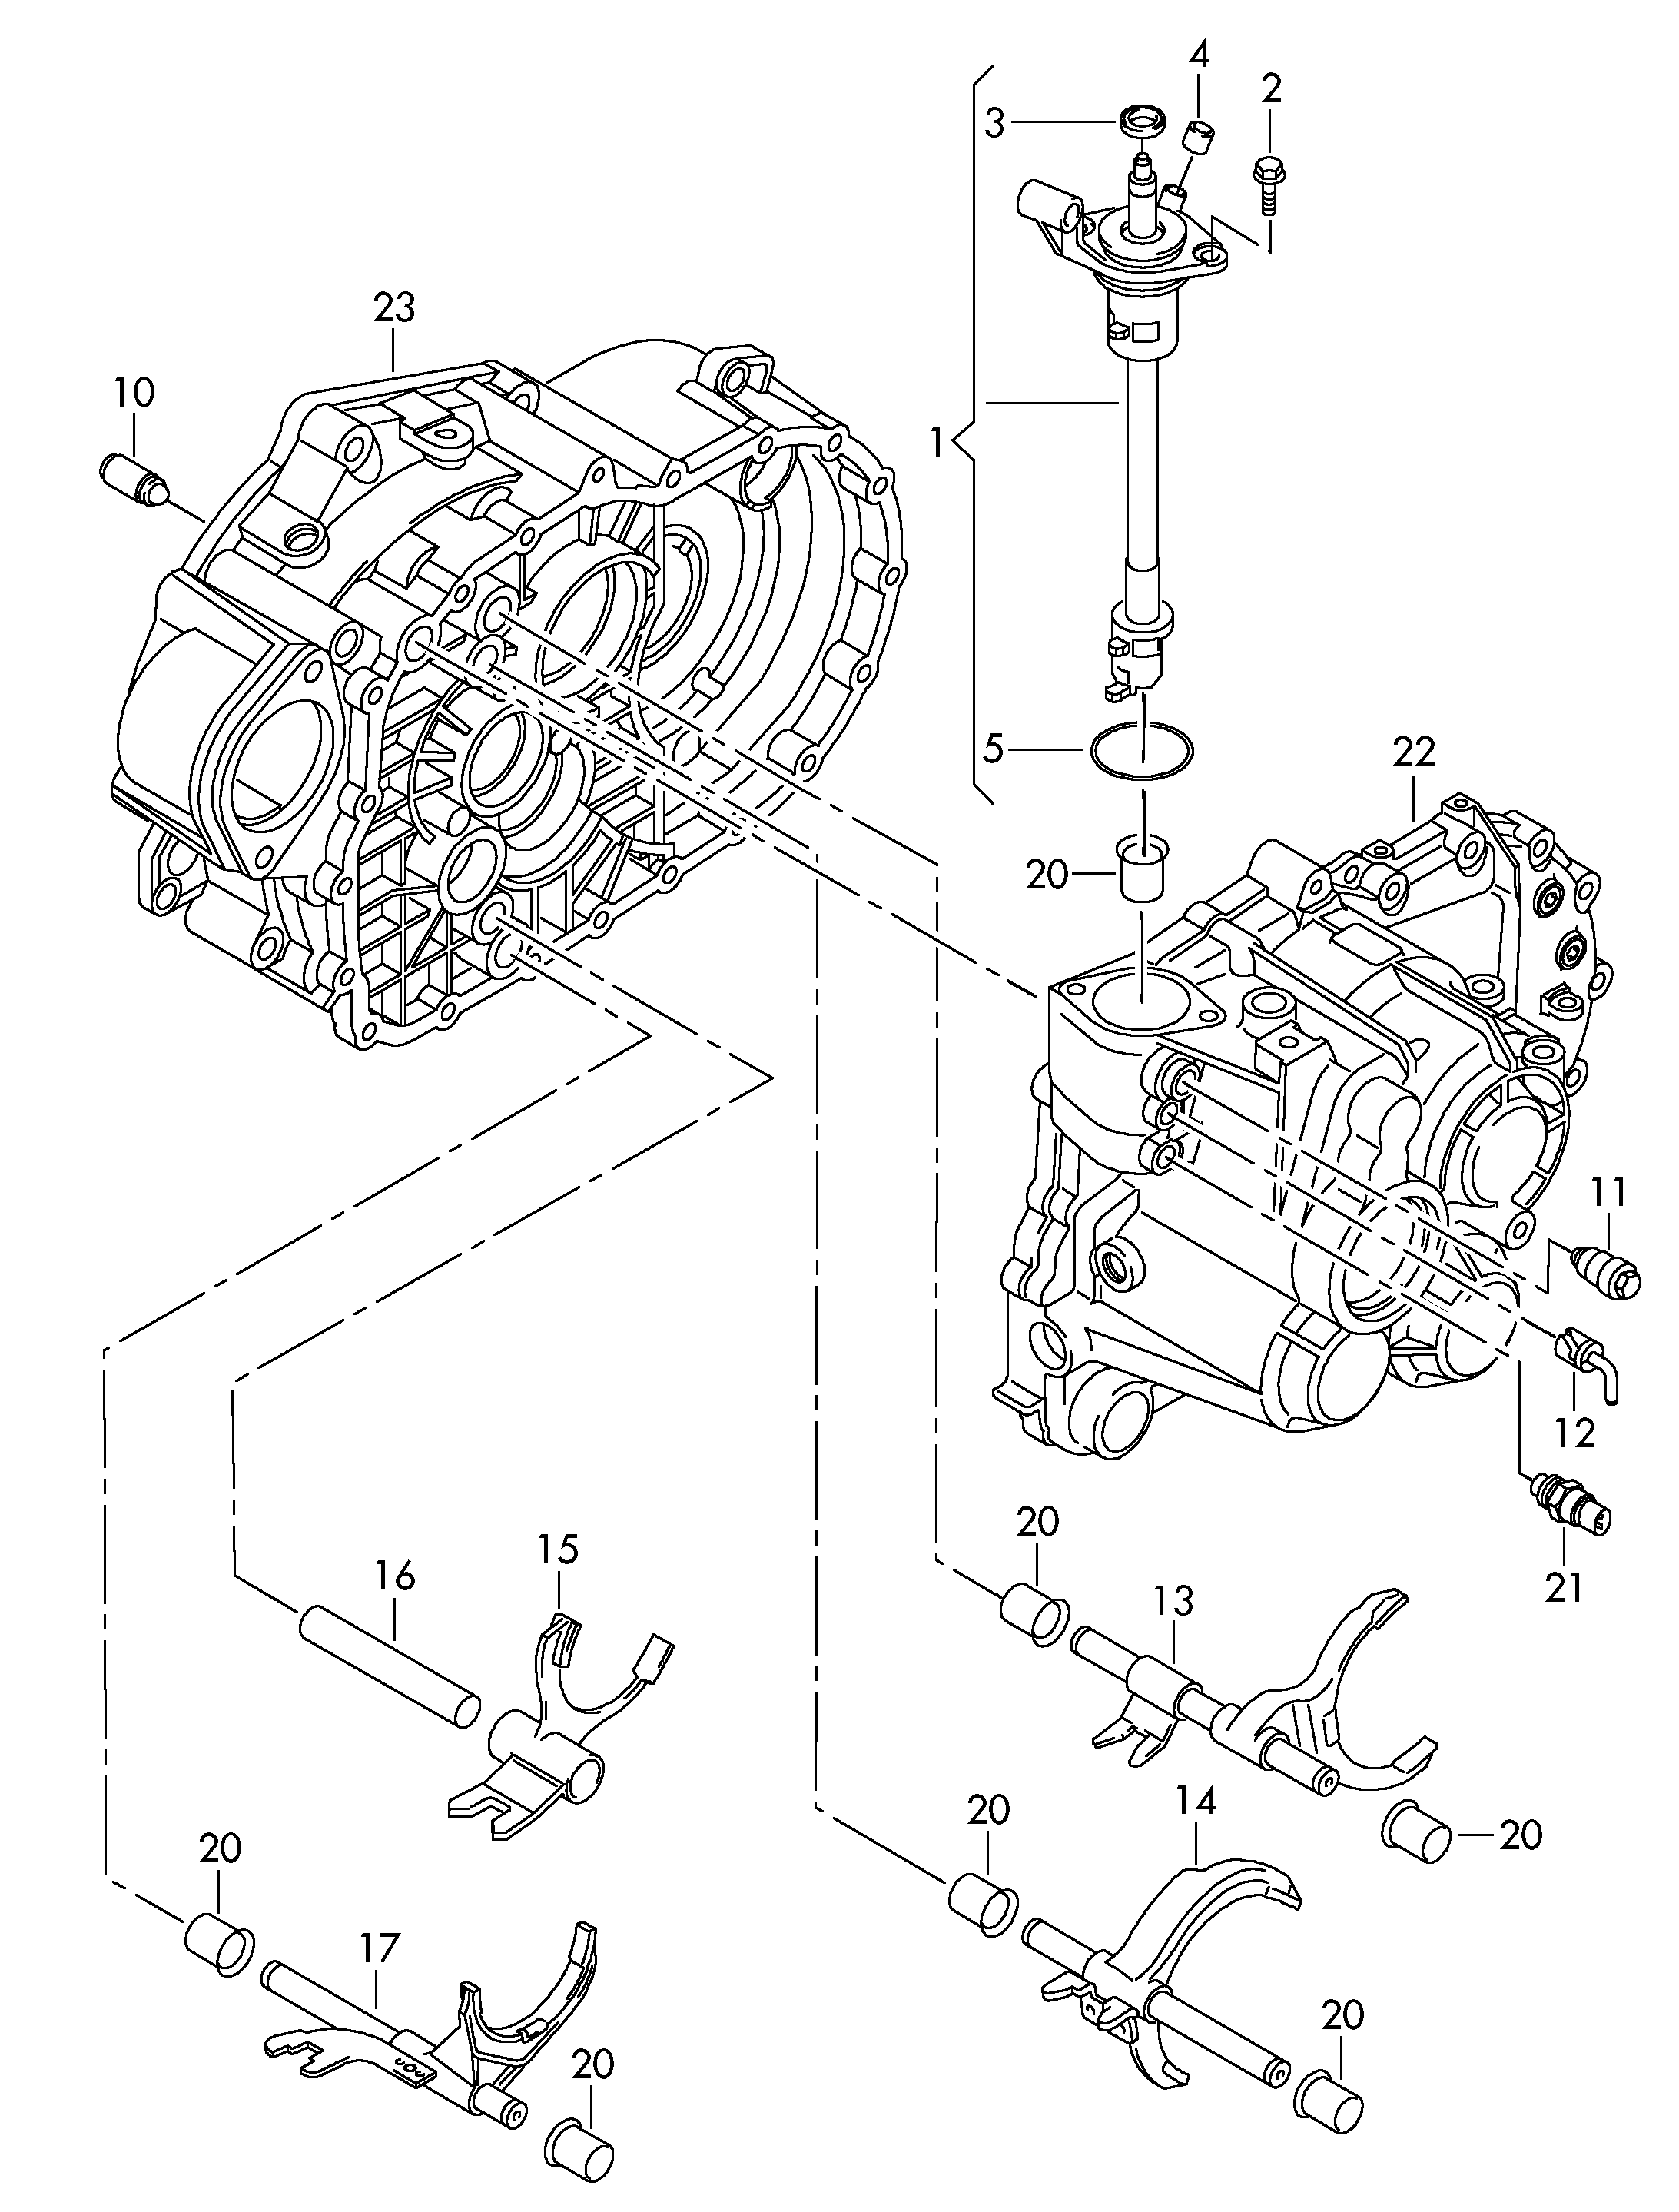 shift rodSelector fork6-speed manual transmissionfor four-wheel drive  - Octavia - oct